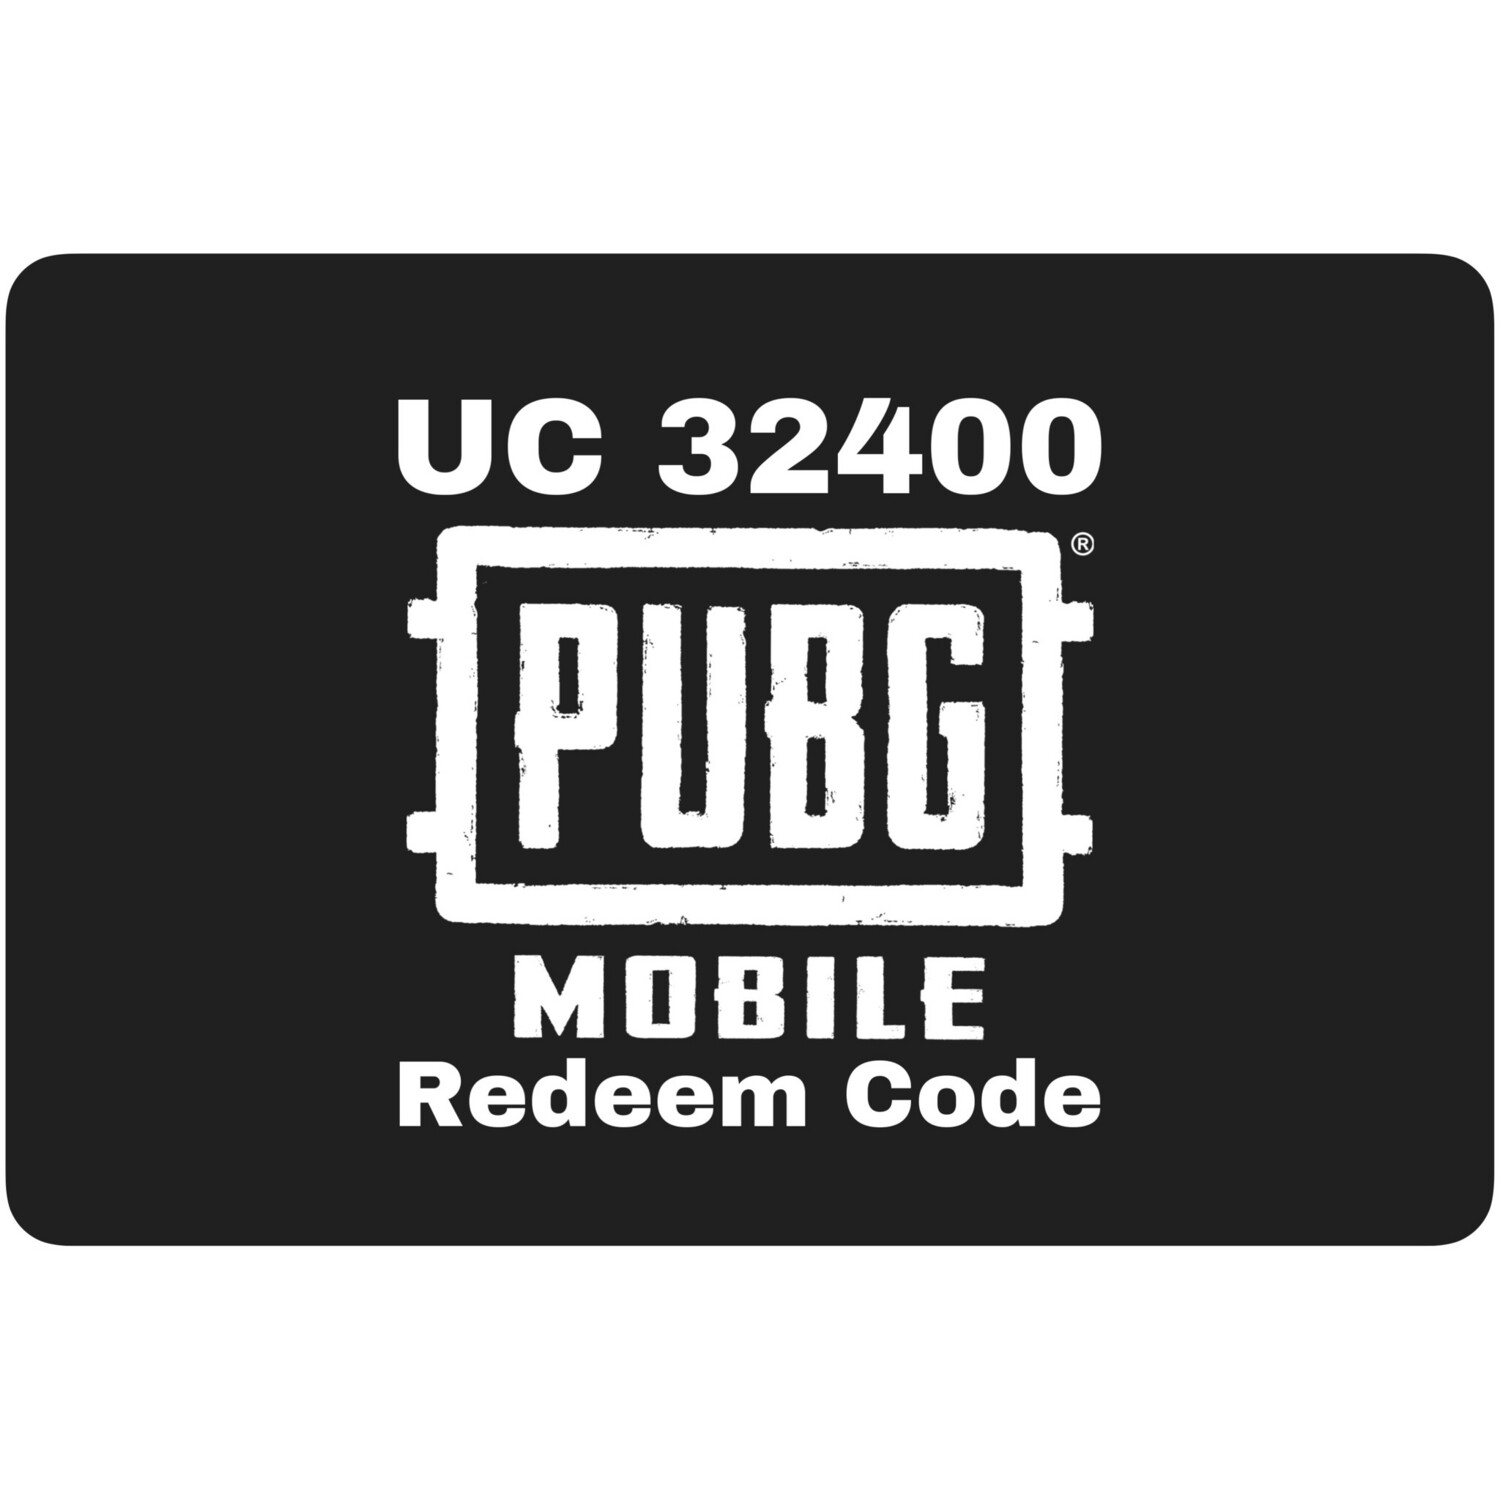 PUBG Mobile UC 32400 Redeem Code